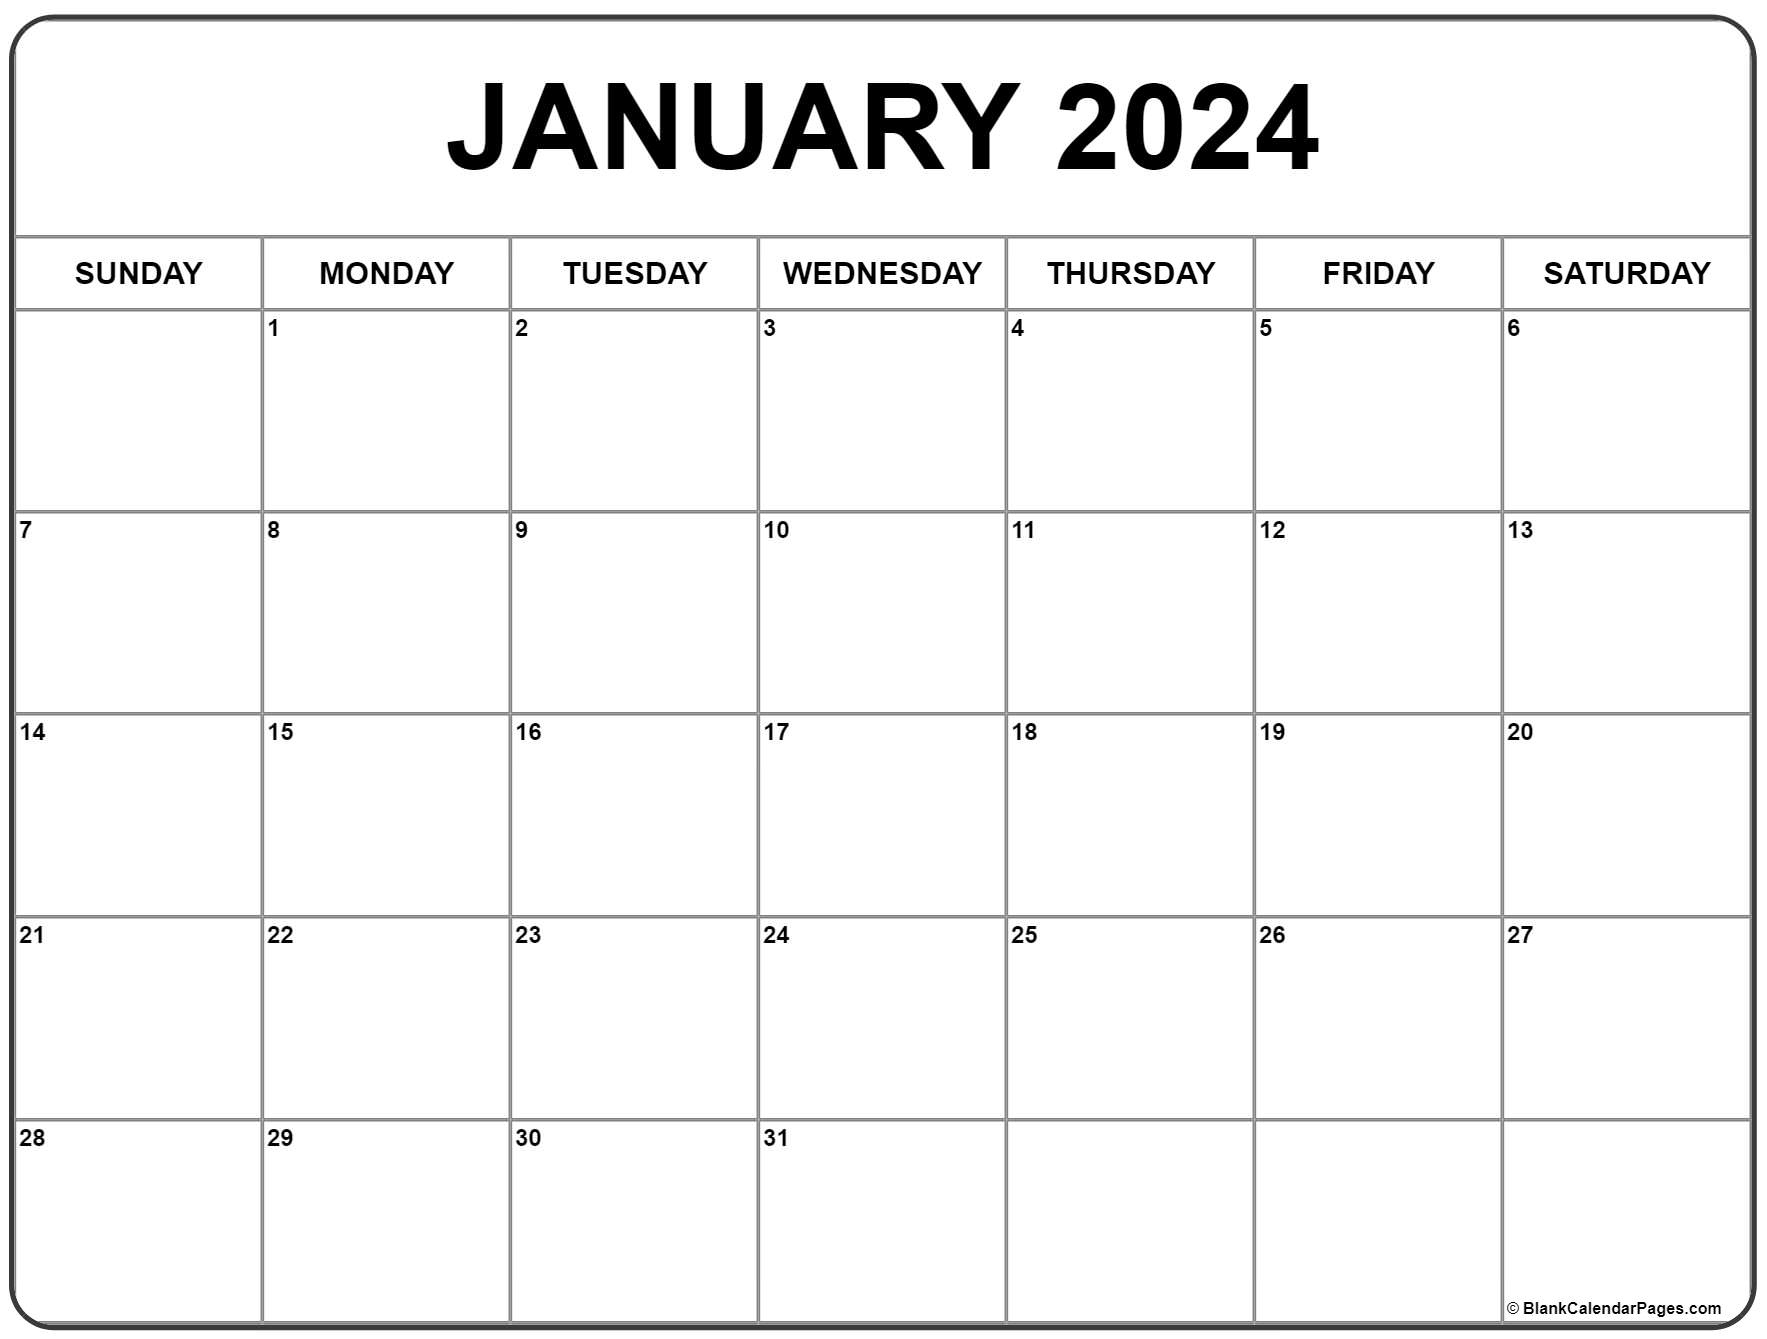 January 2024 Calendar | Free Printable Calendar | Printable January 2024